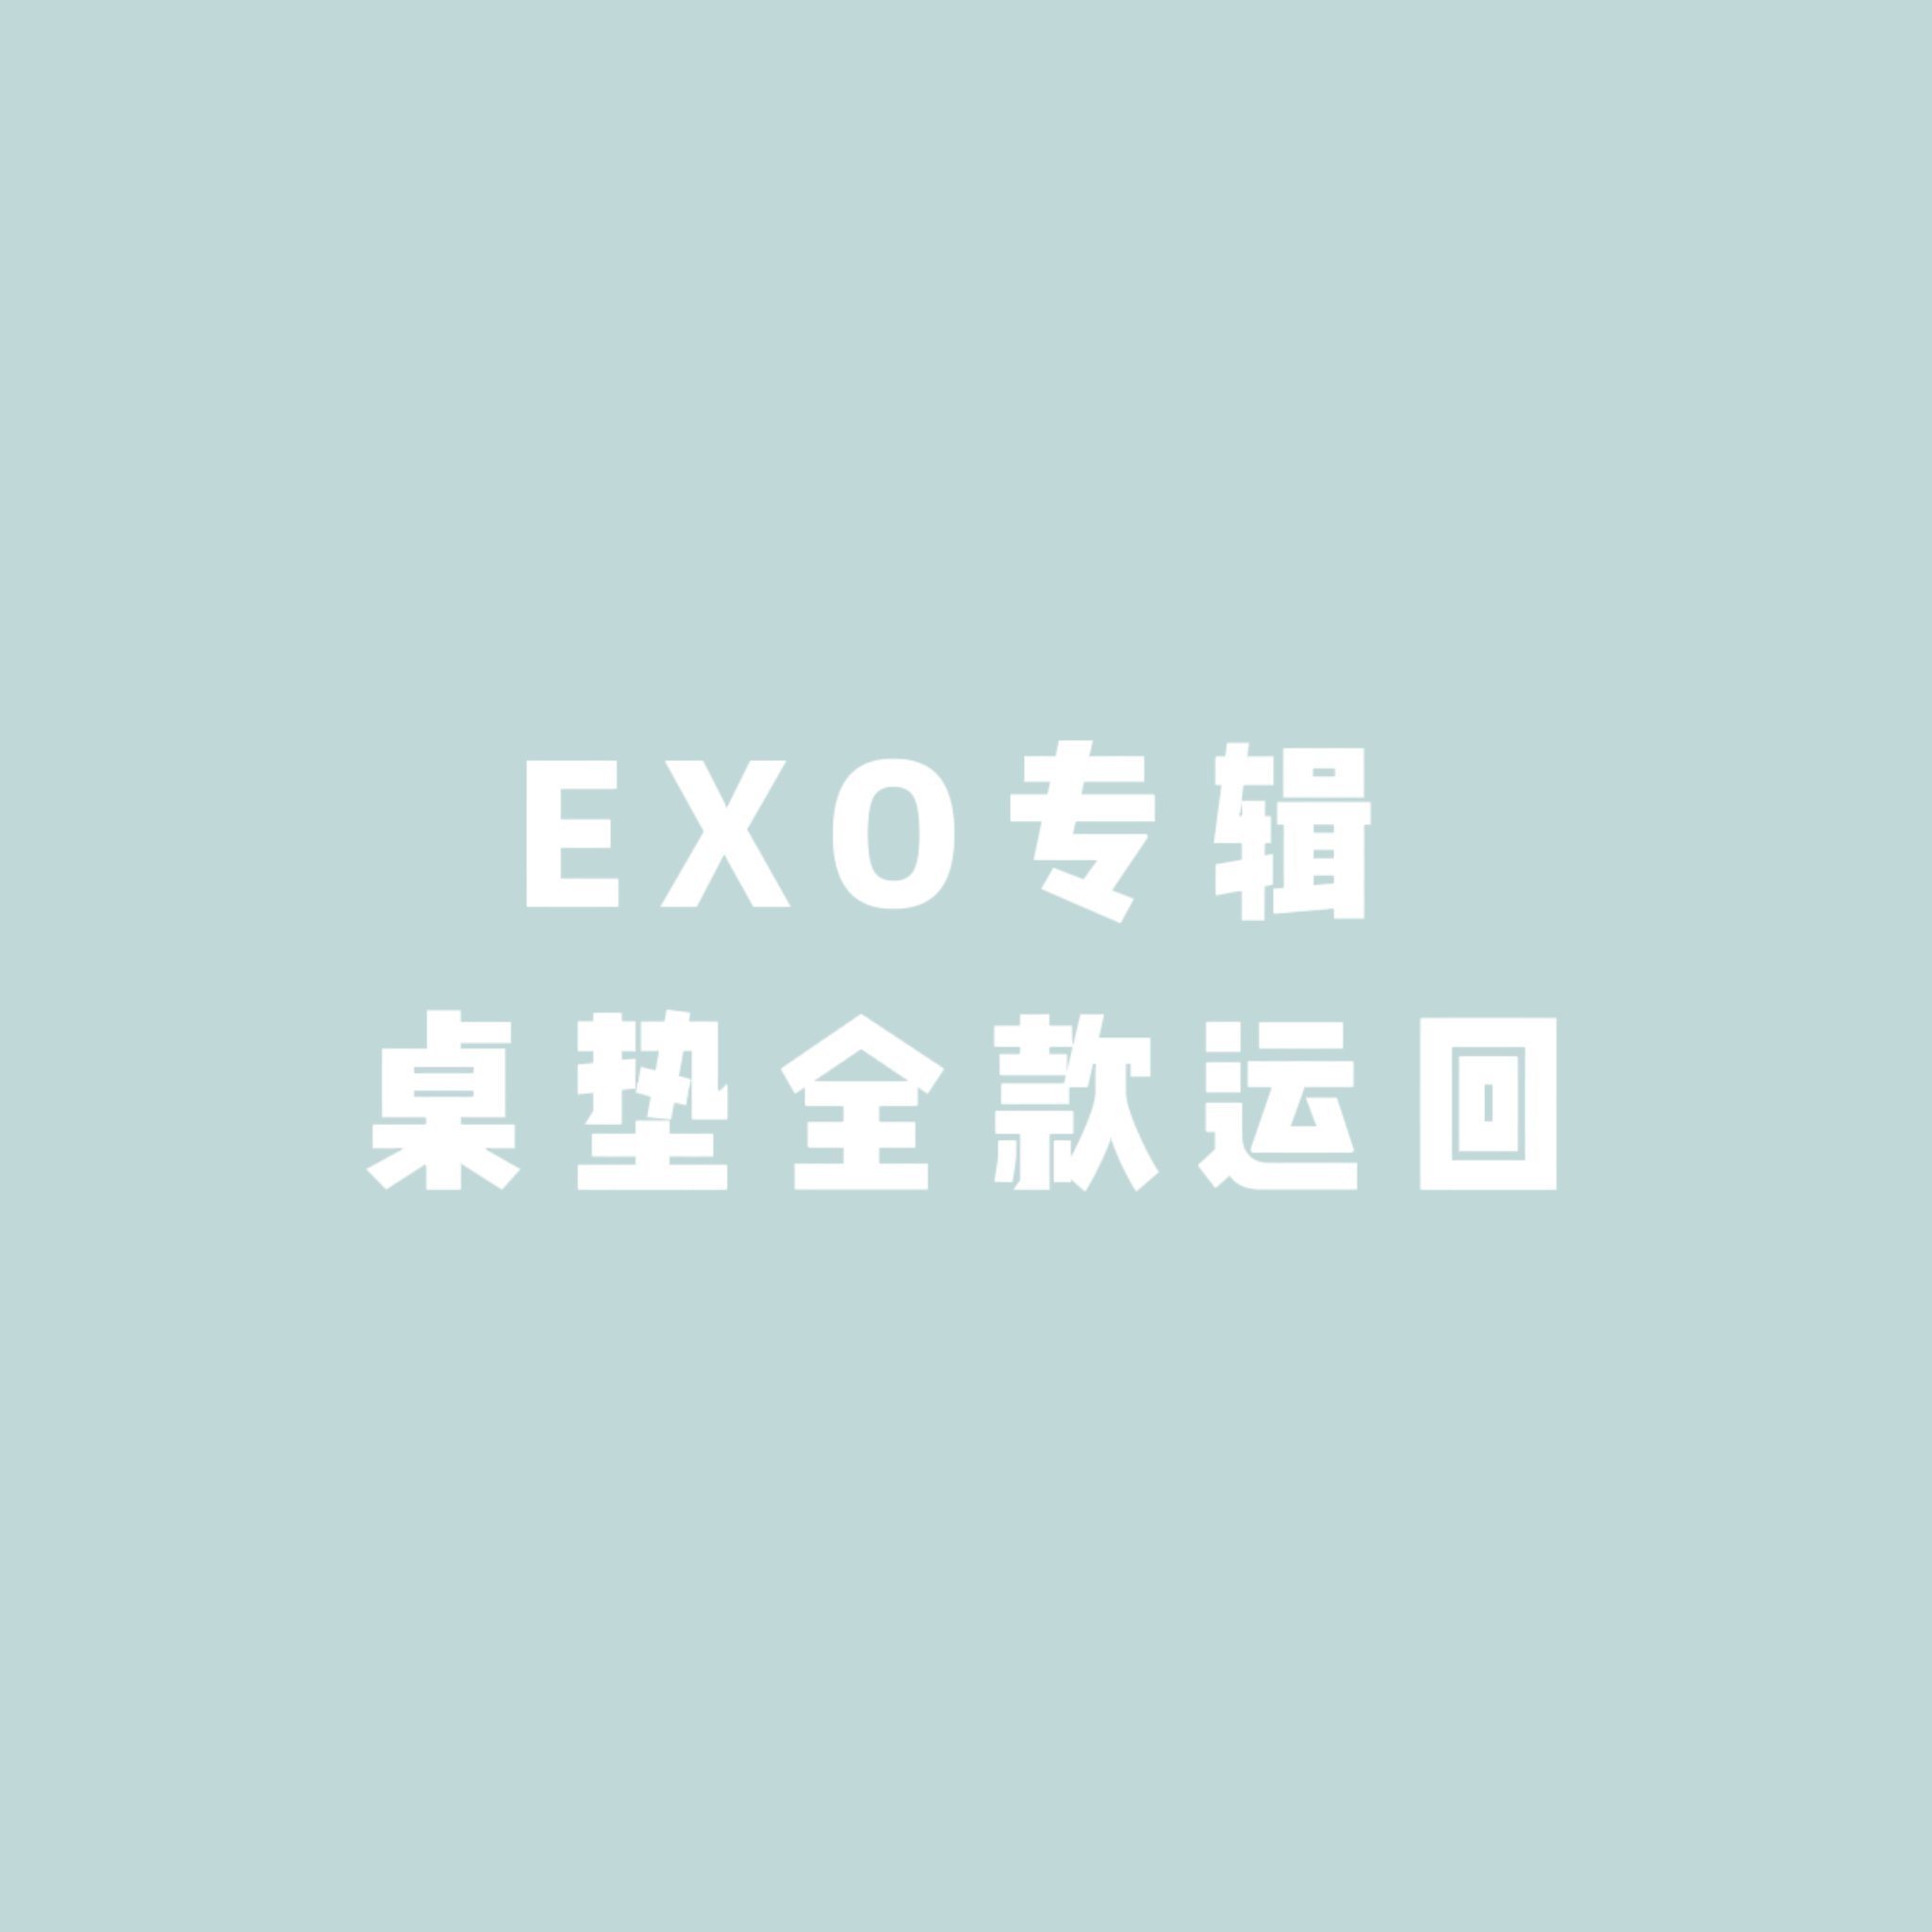 [全款 桌垫] EXO - Special Album [DON’T FIGHT THE FEELING]_EXO-Eternal永恒站